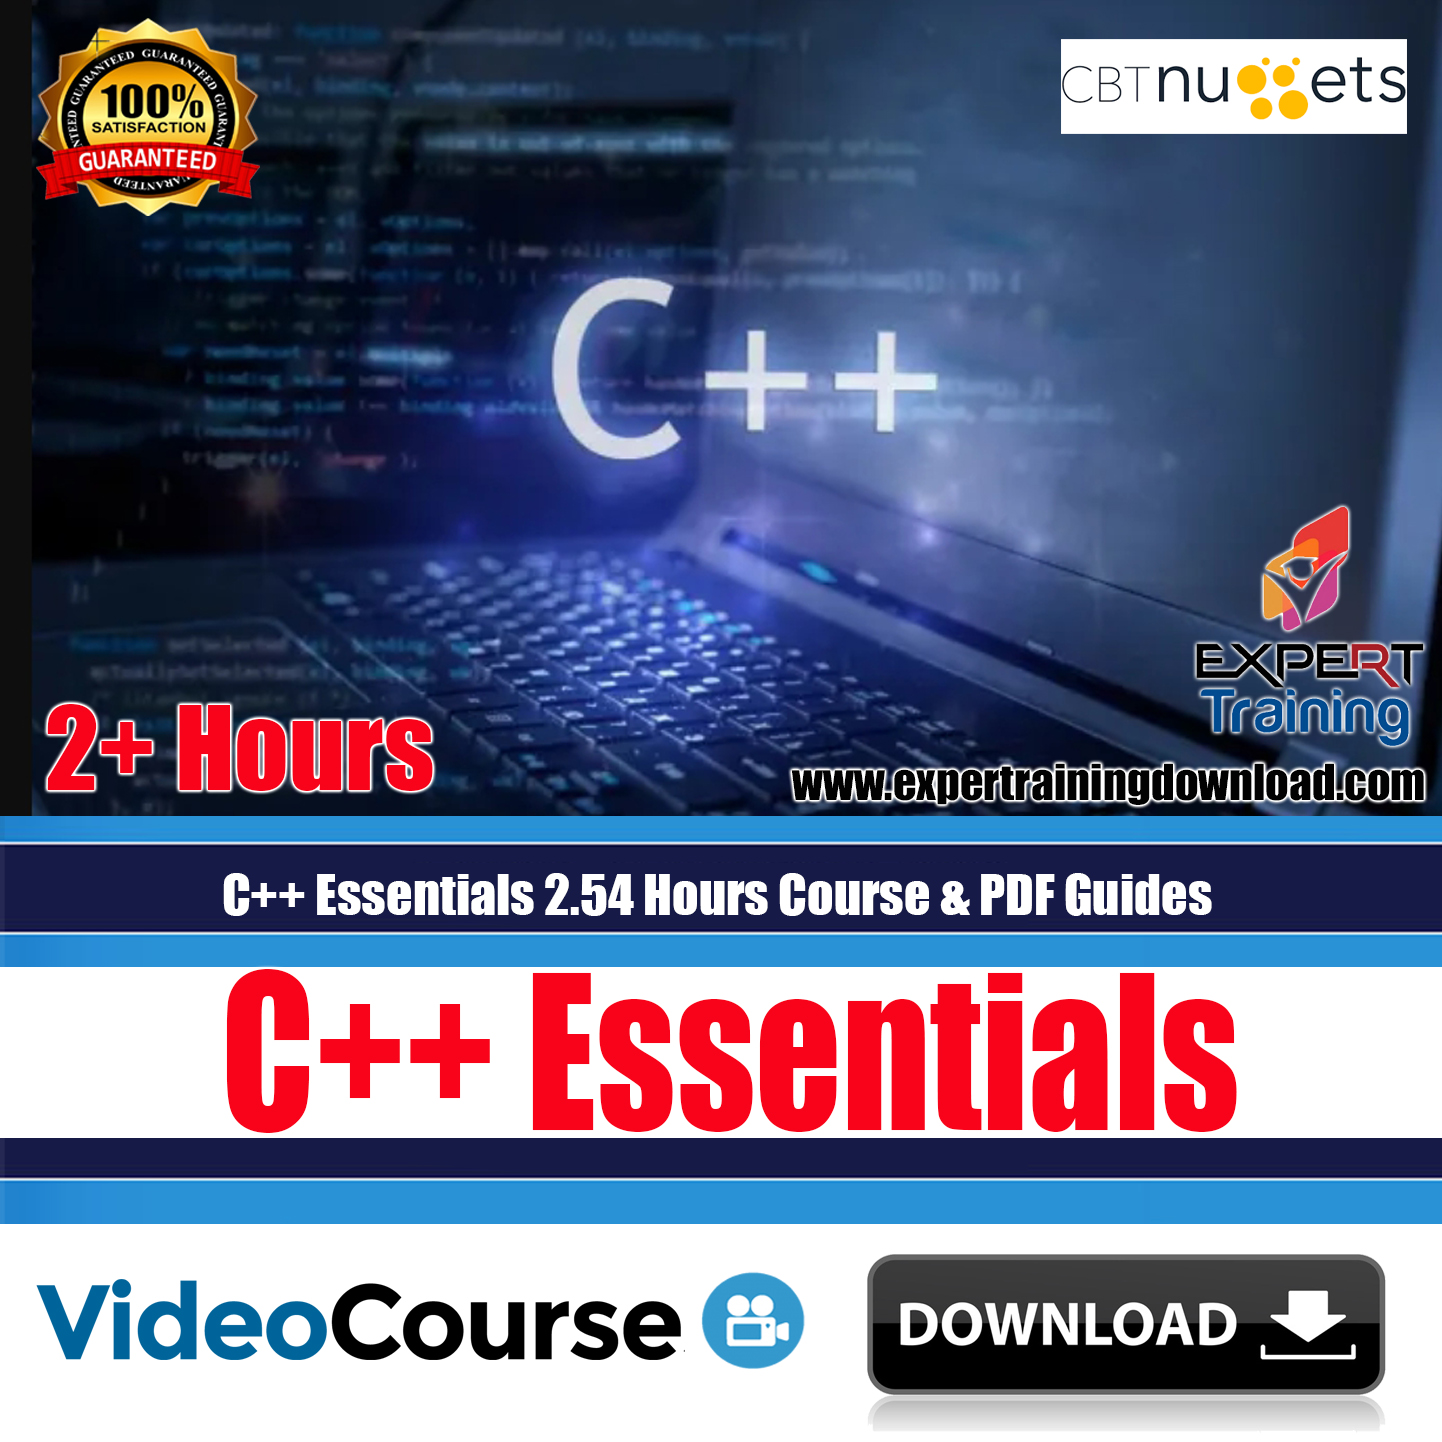 C++ Essentials 2.5 Hours Course & PDF Guides